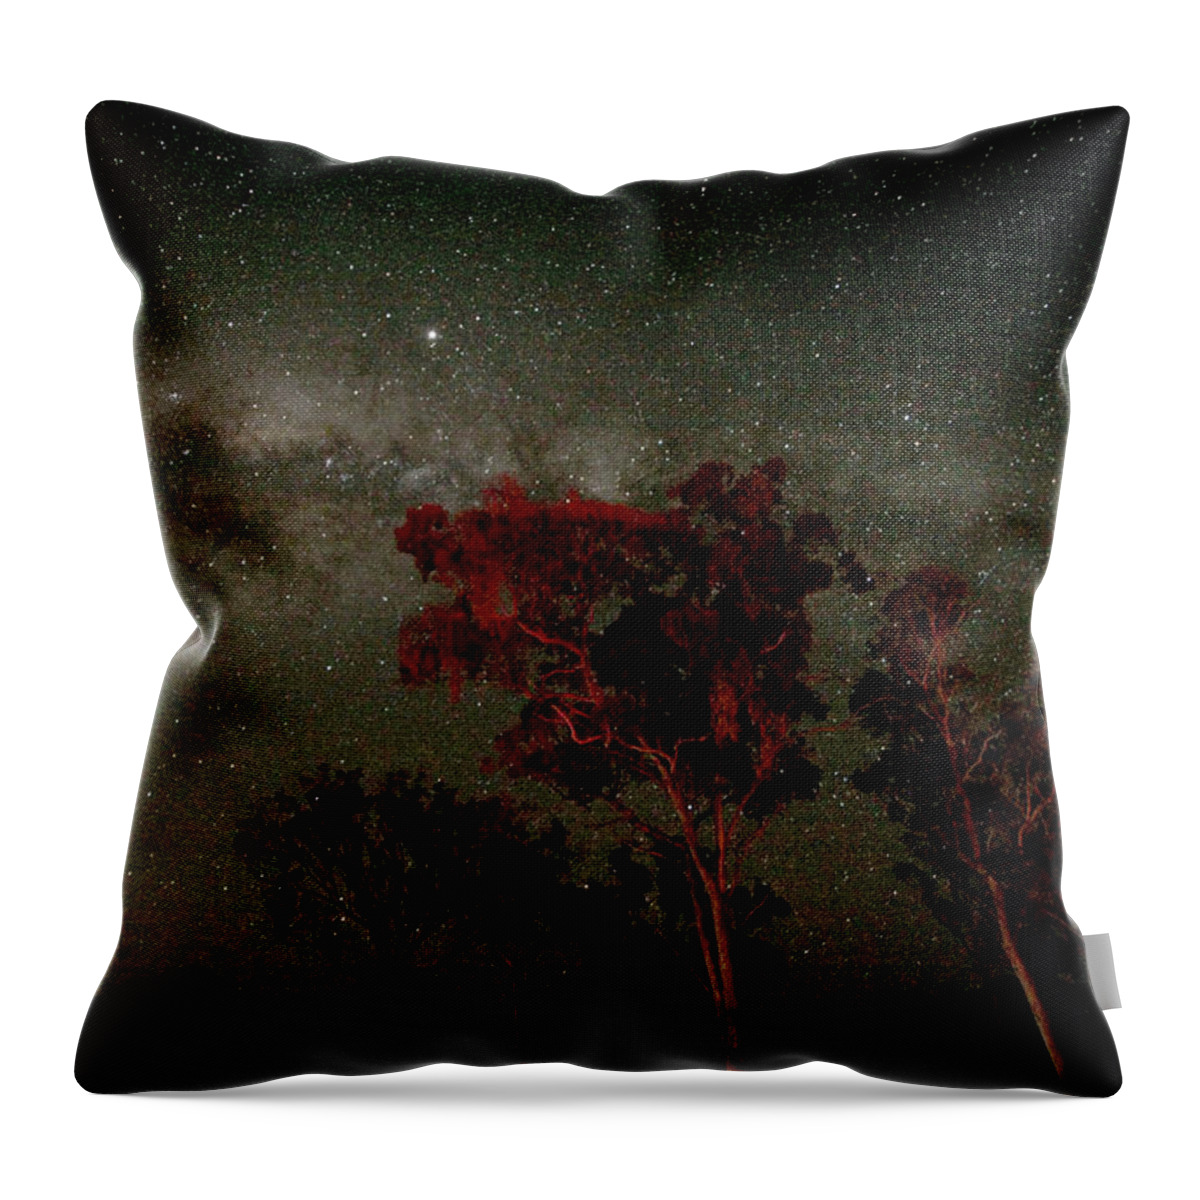 Galaxy Throw Pillow featuring the photograph Australian Night by Paco Alcantara